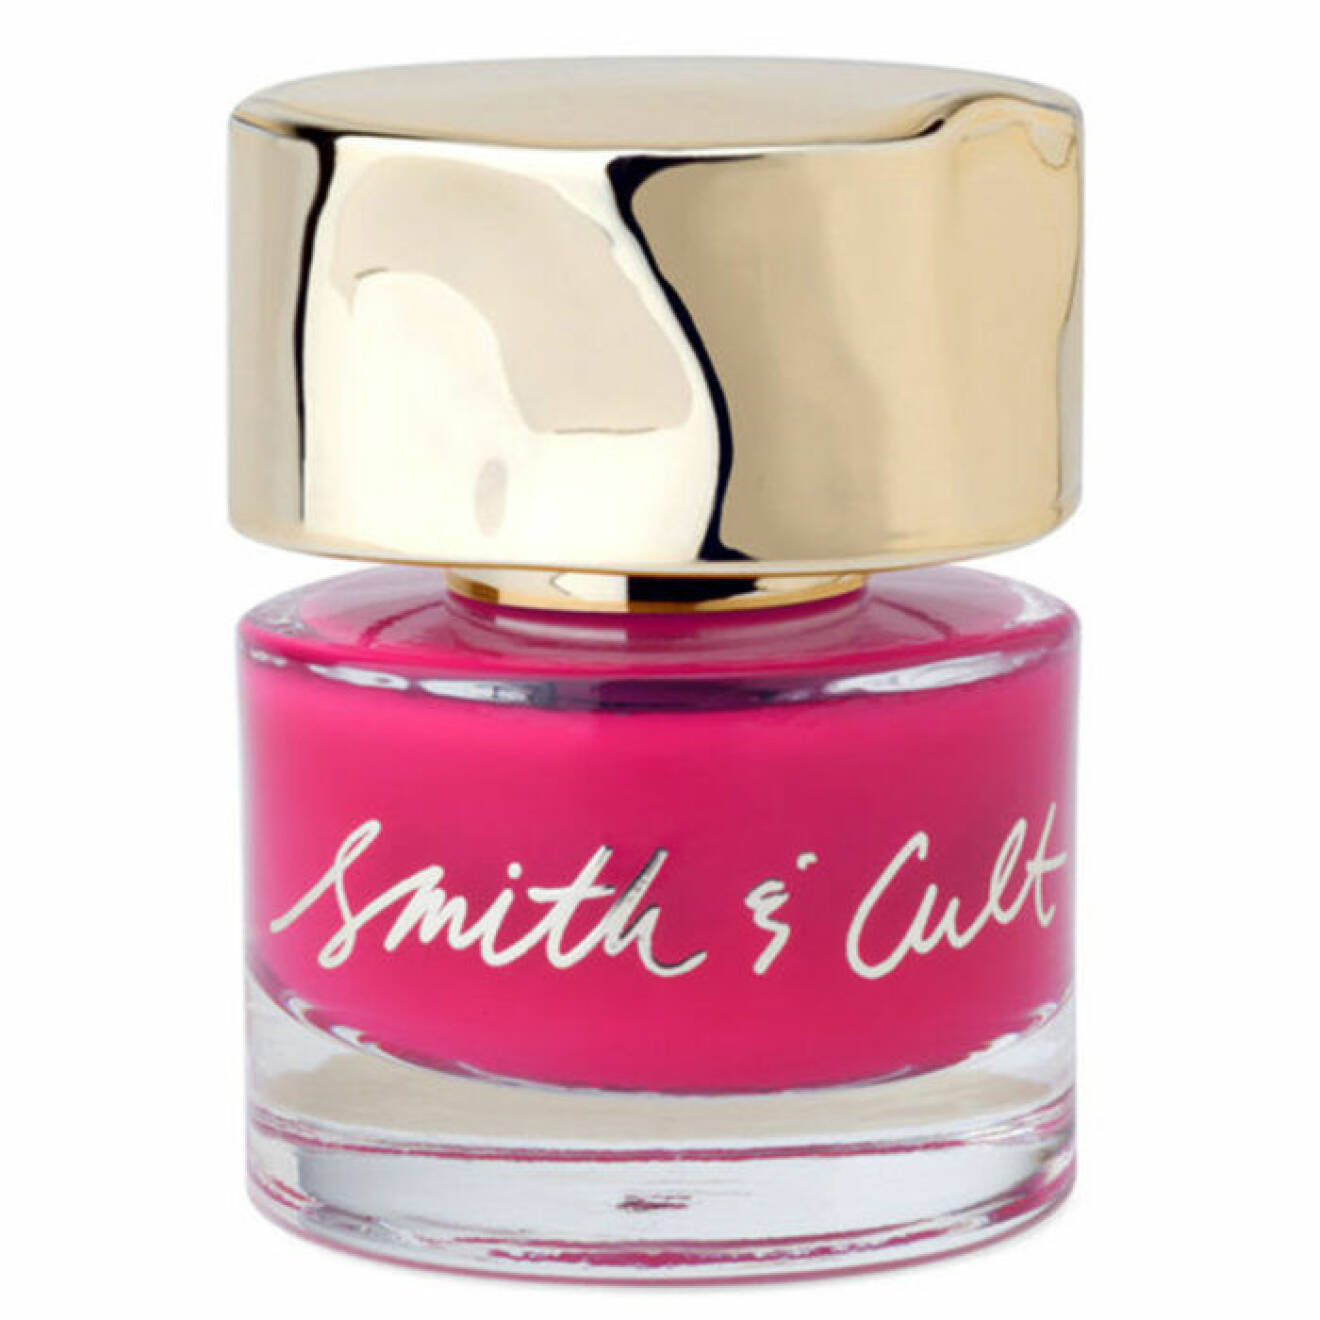 Smiths & Cults rosa nagellack